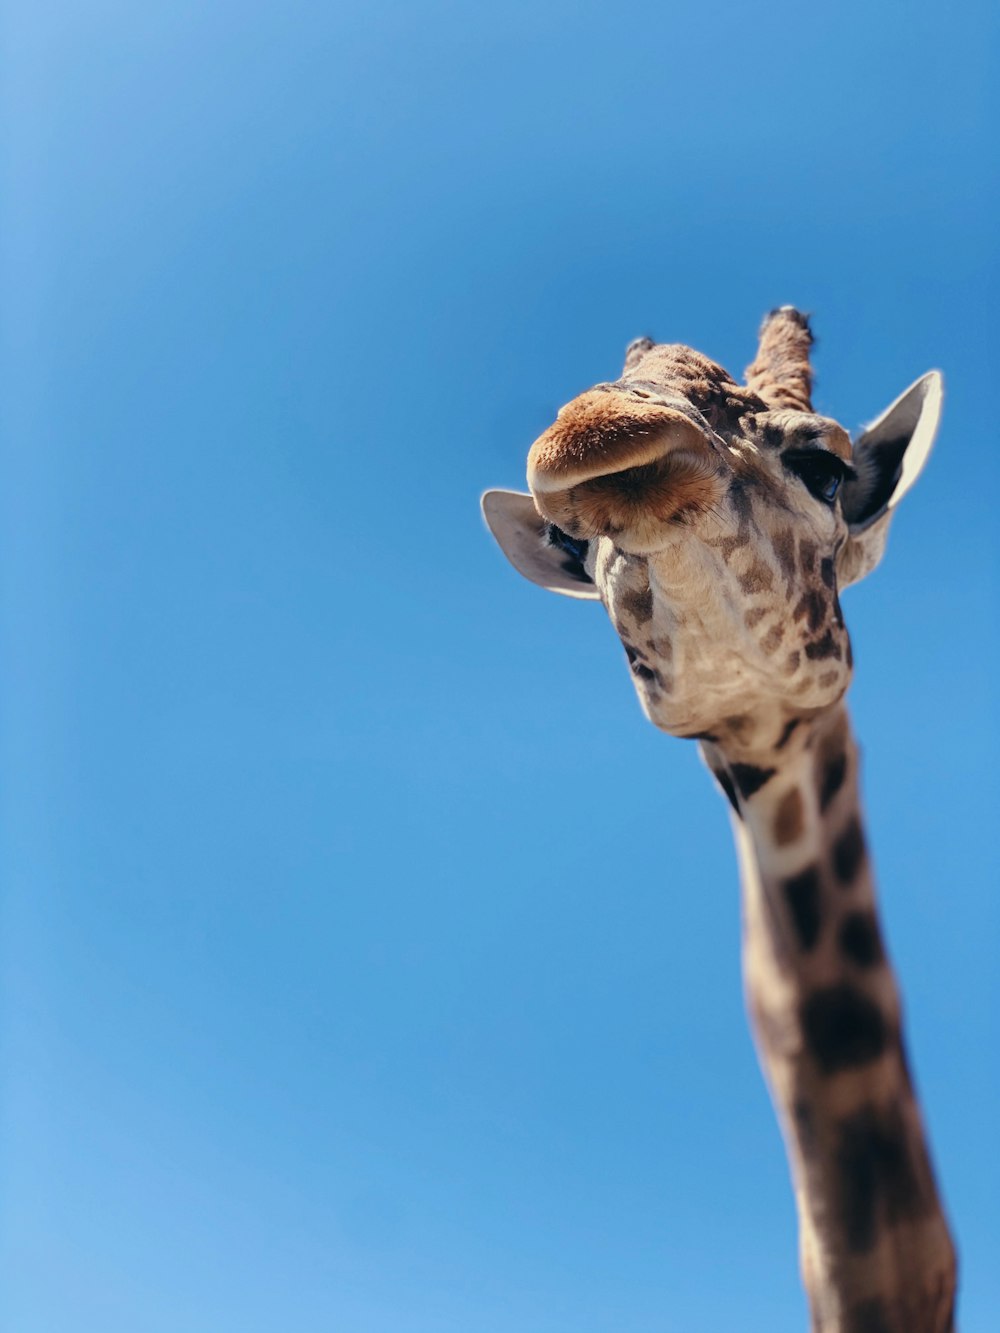 brown and black giraffe under blue sky during daytime